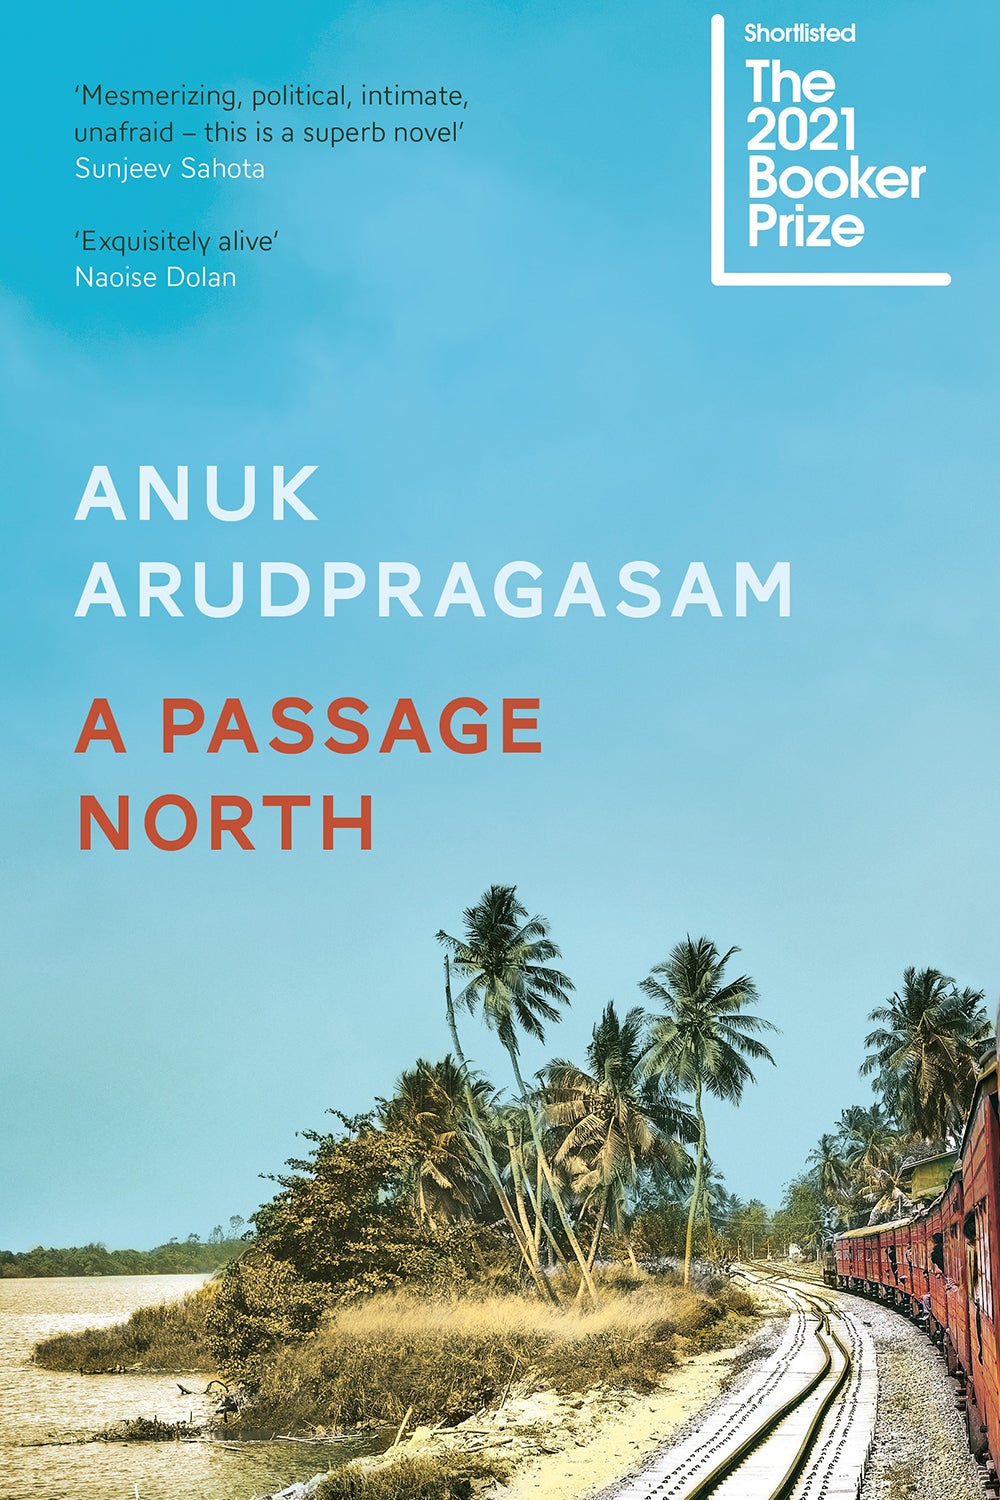 The Passage North by Anuk Arudpragasam